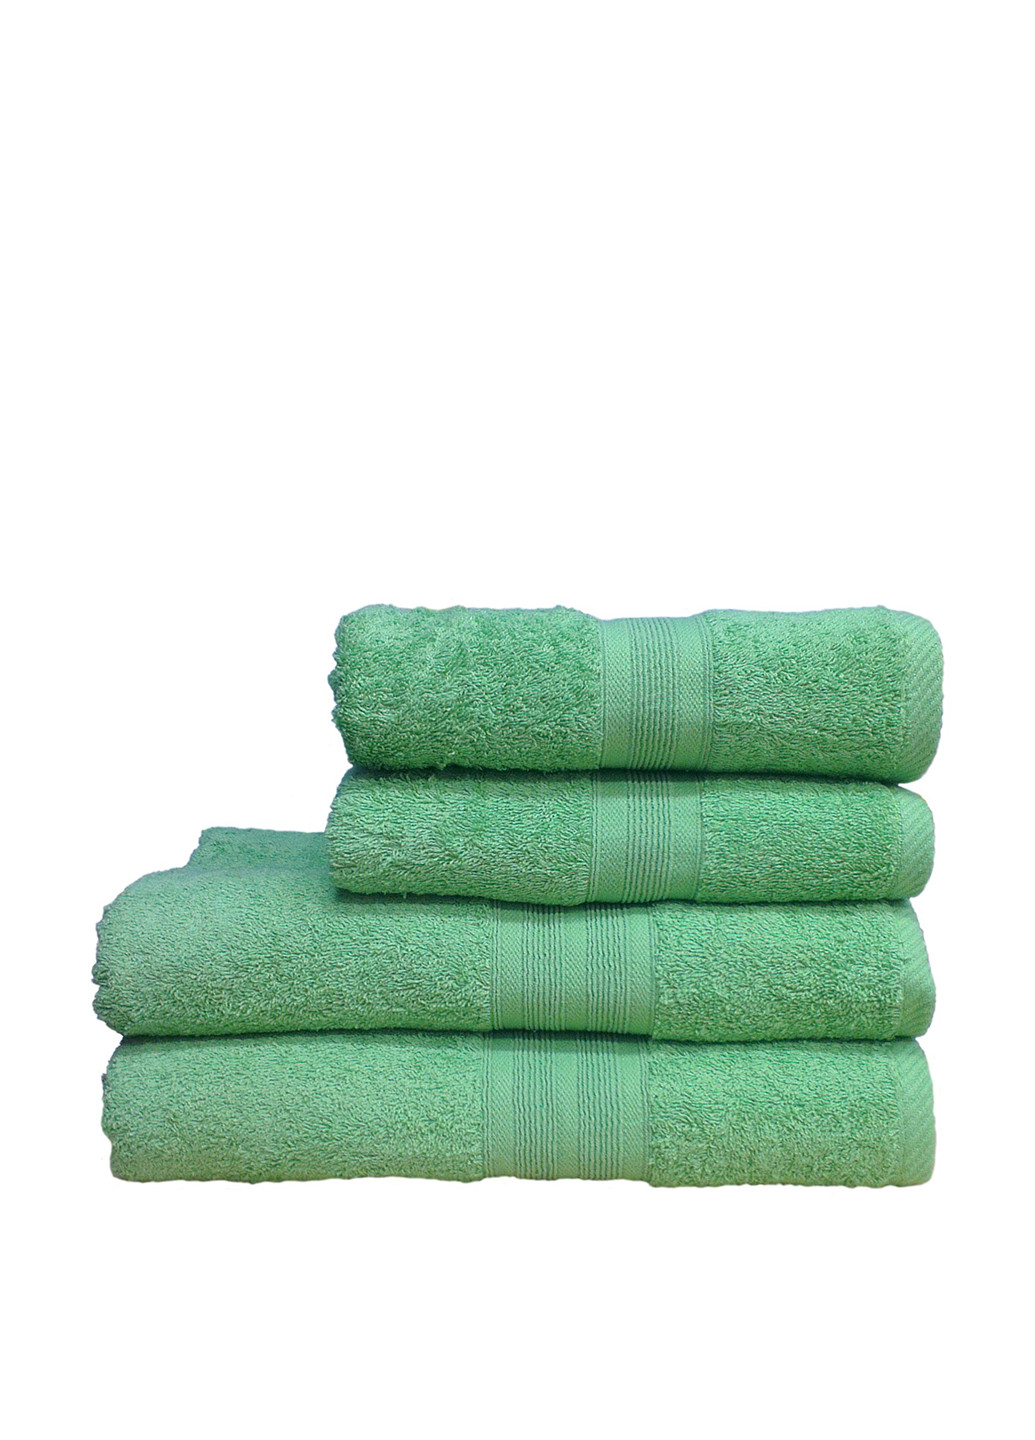 No Brand полотенце, 50х100 см однотонный зеленый производство - Пакистан